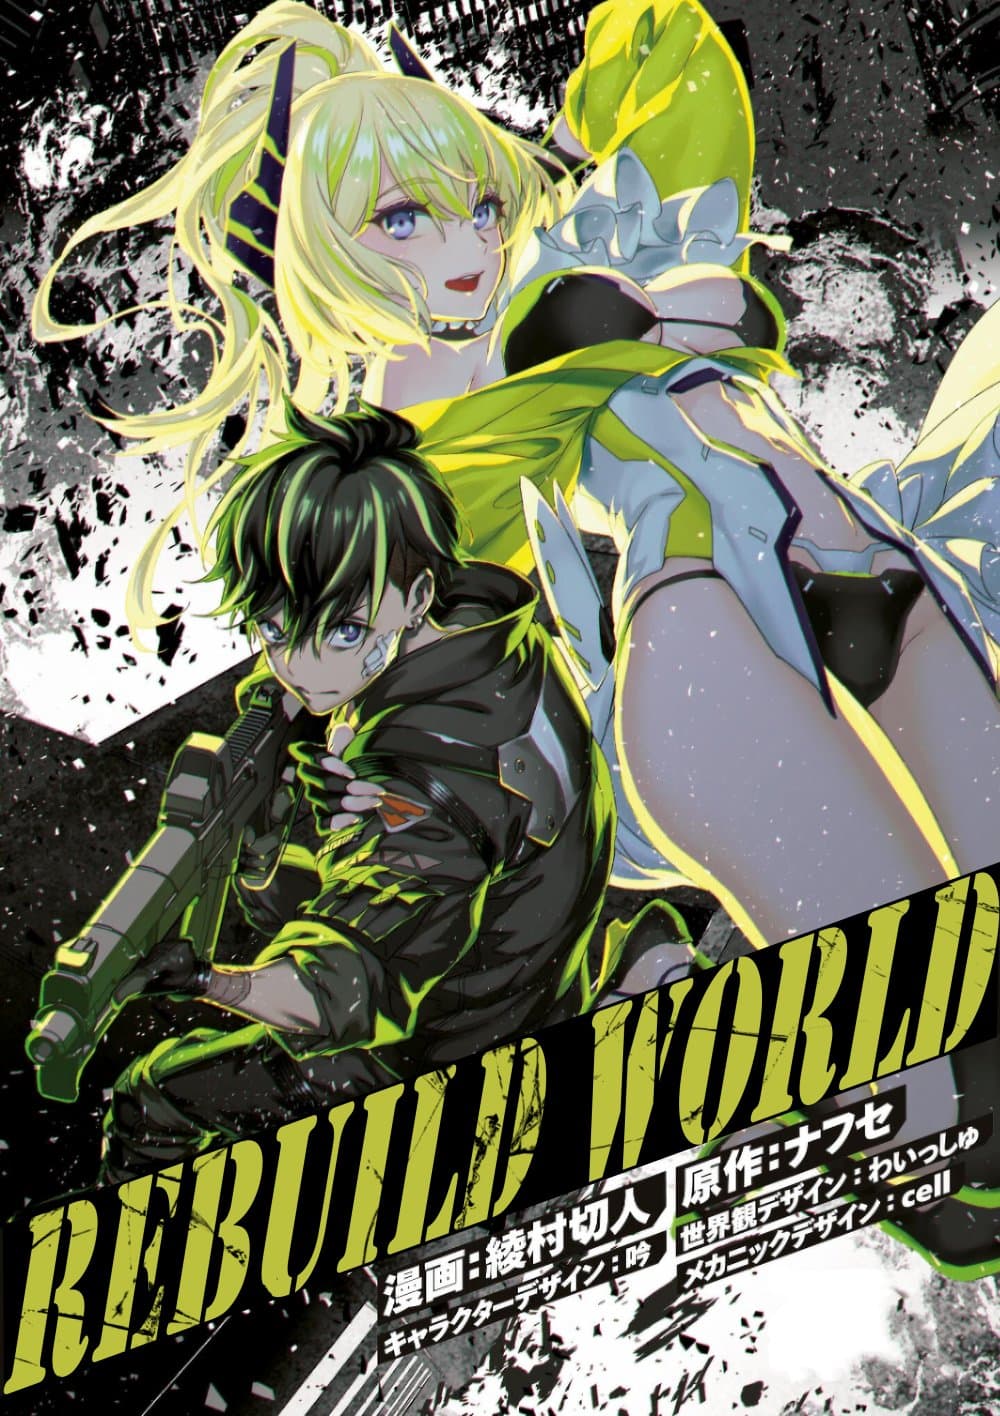 Rebuild World 26 (1)